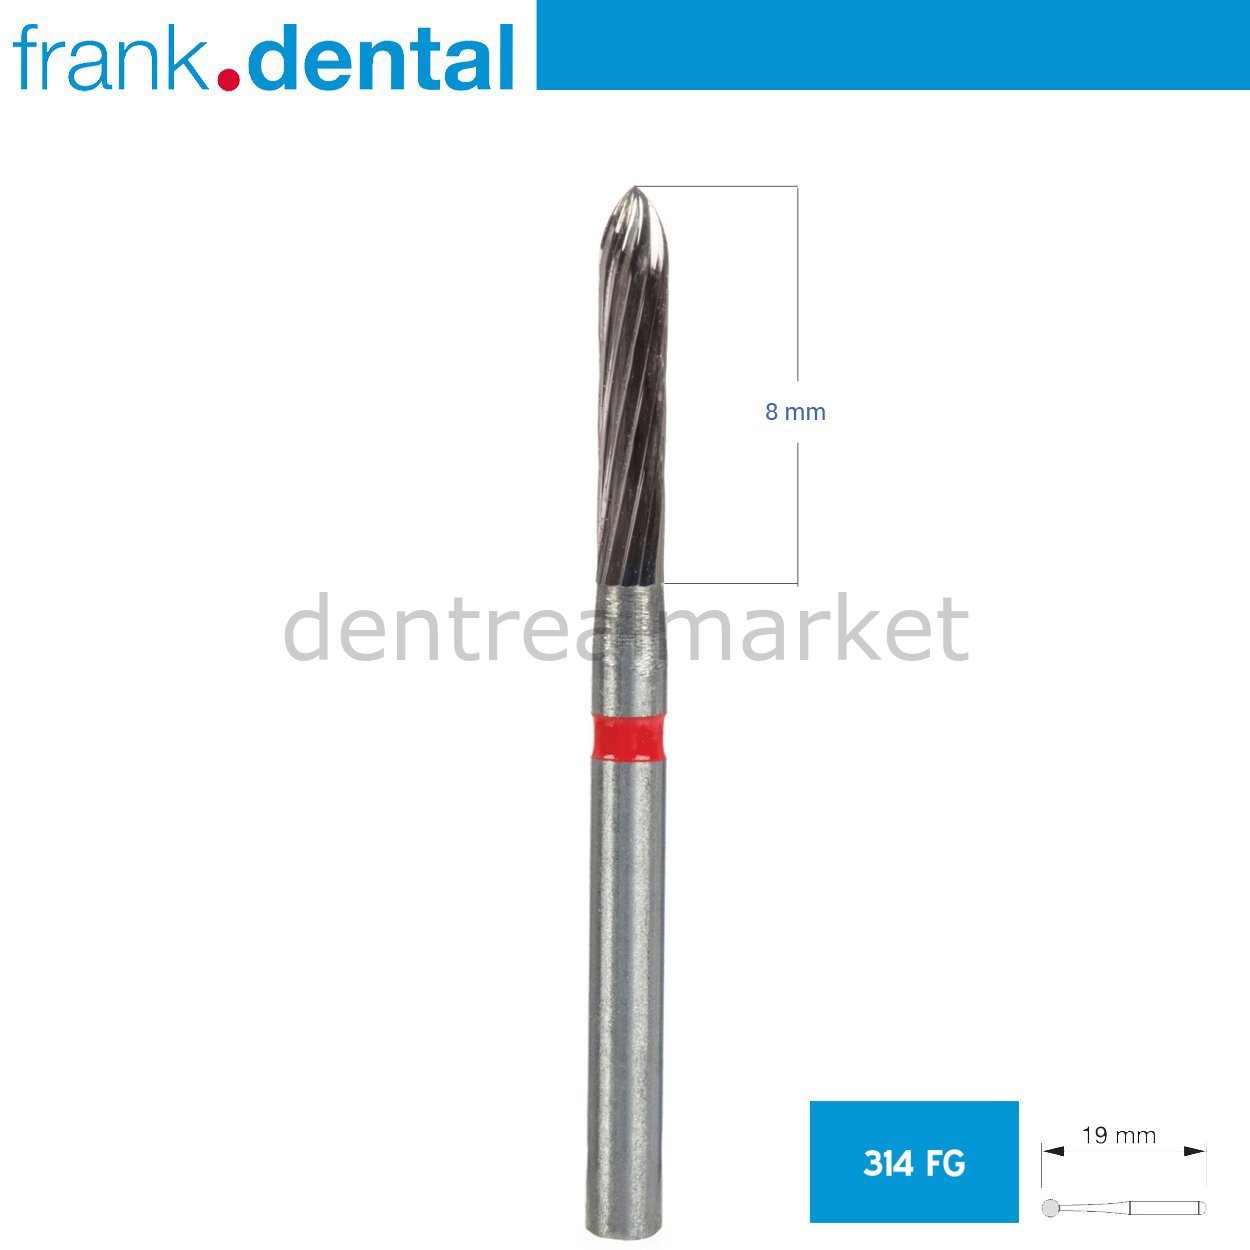 DentrealStore - Frank Dental Orthodontic Adhesive Remover & Debonding Bur - 283 - For Air Turbine